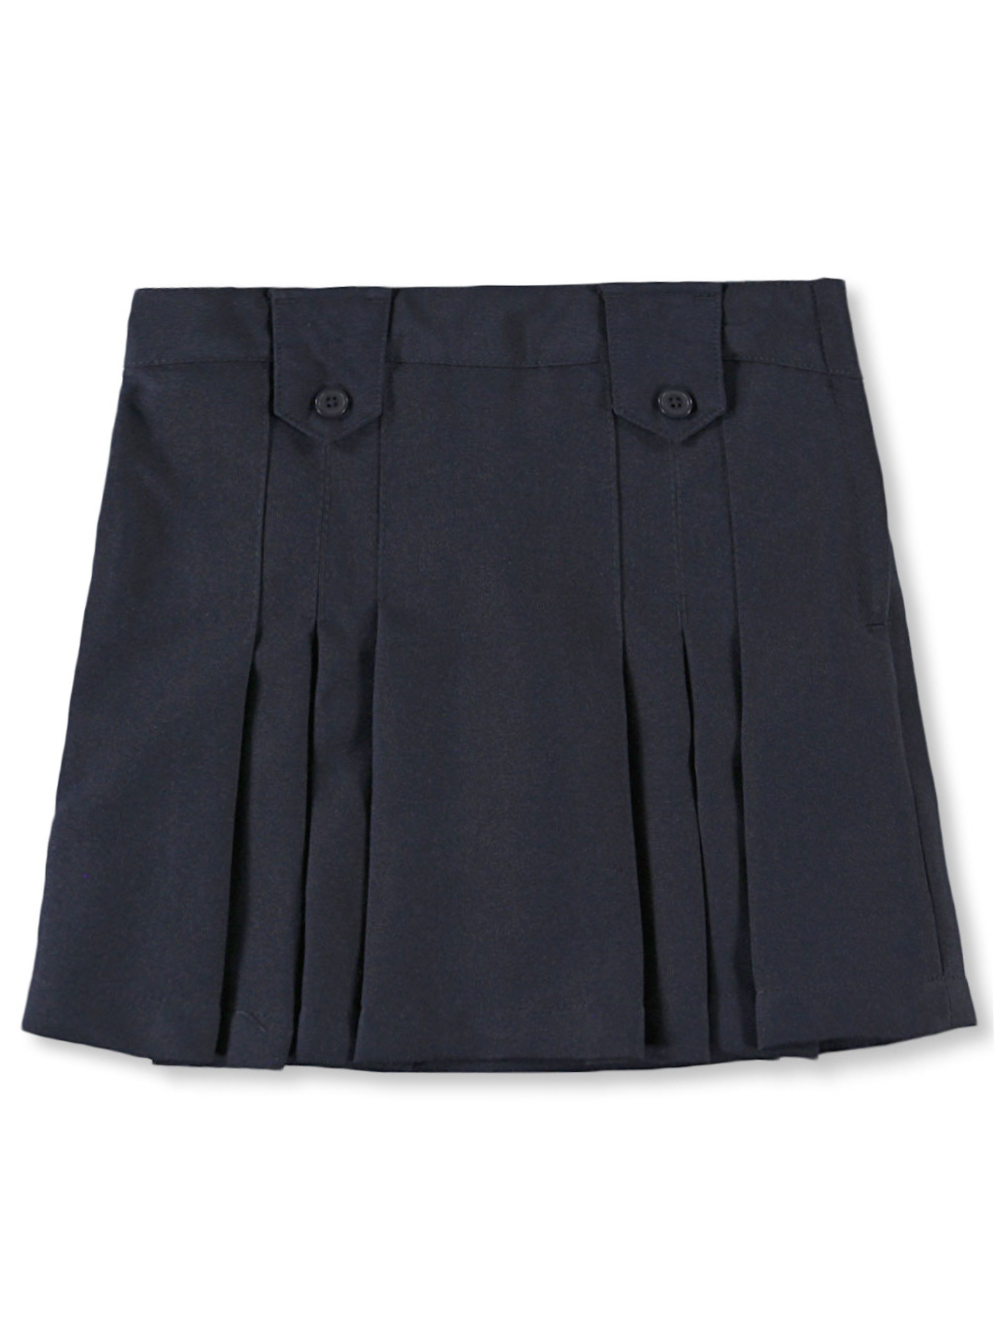 Cookie's Girls' Twill School Uniform Pants - black, 4 (Little Girls)